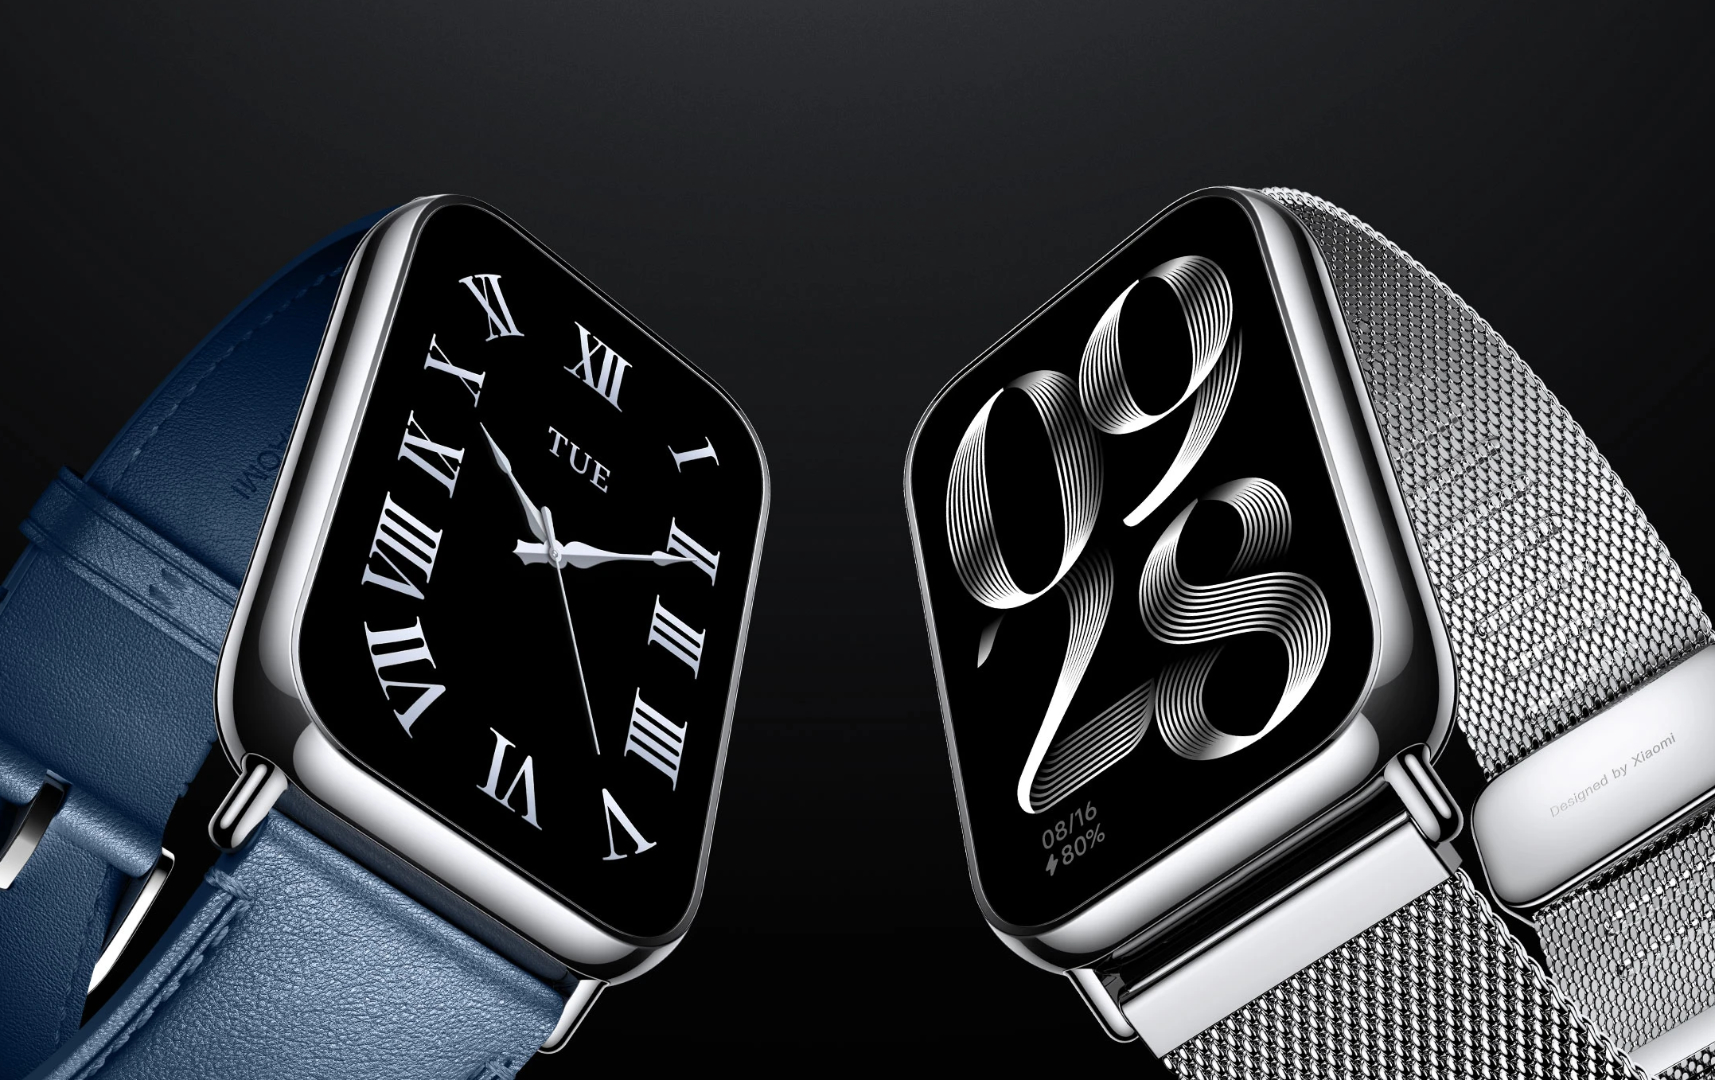 Xiaomi Smart Band 8 Pro debuts as new stylish smartwatch packed